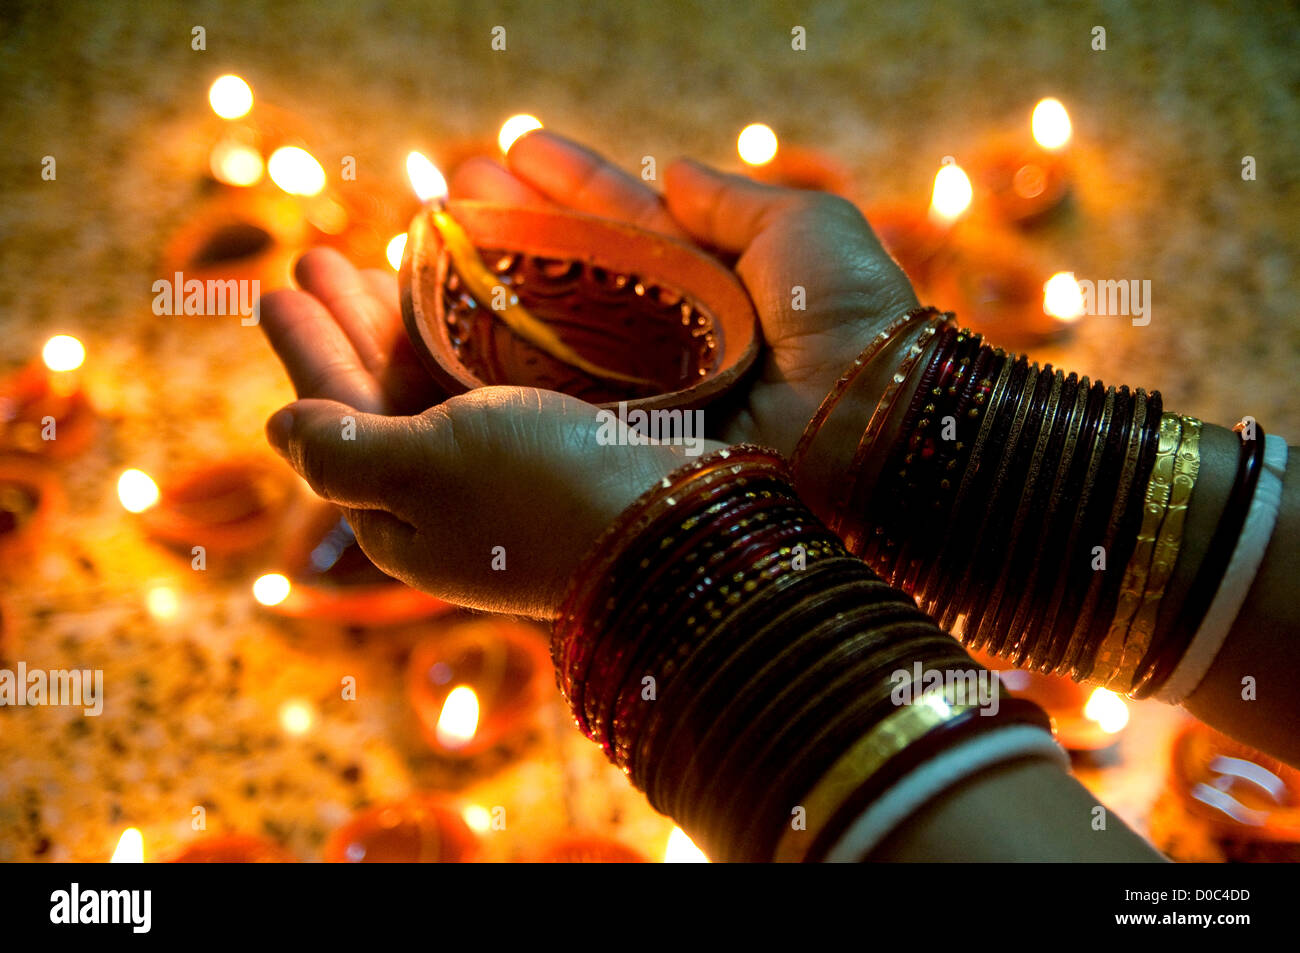 Diwali Lampe Stockfoto